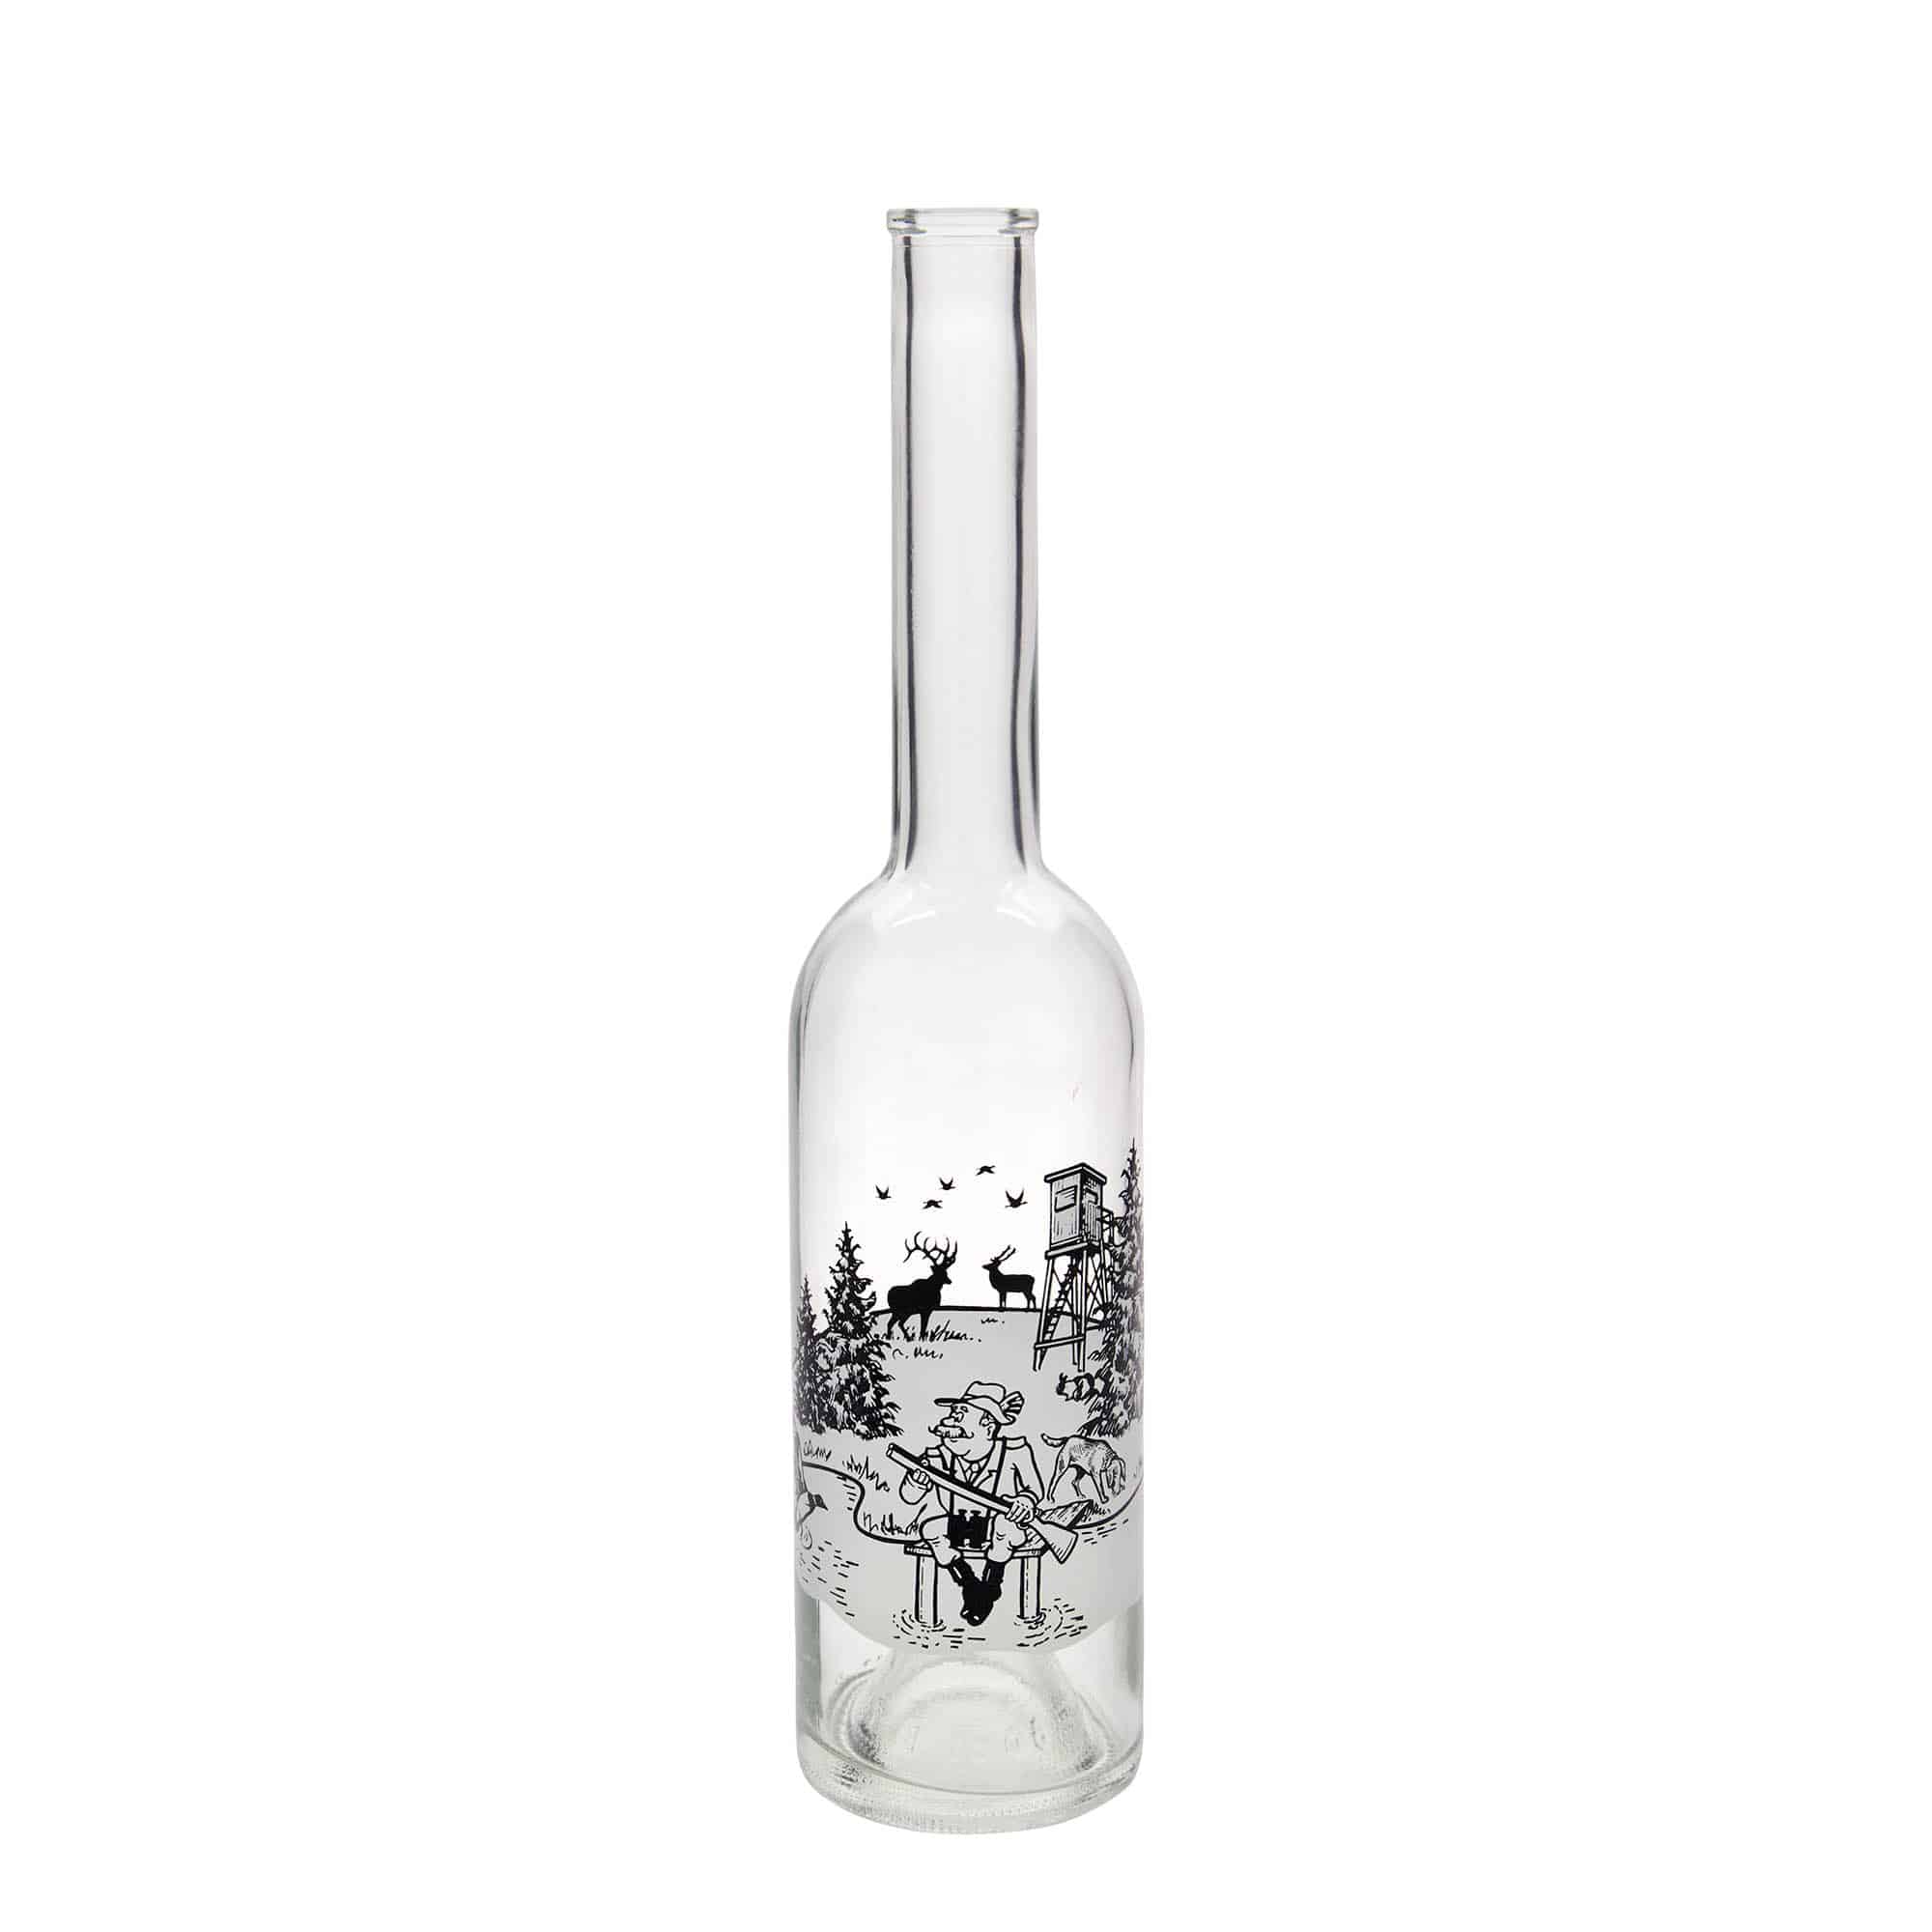 500 ml glass bottle 'Opera', print: hunter, closure: cork